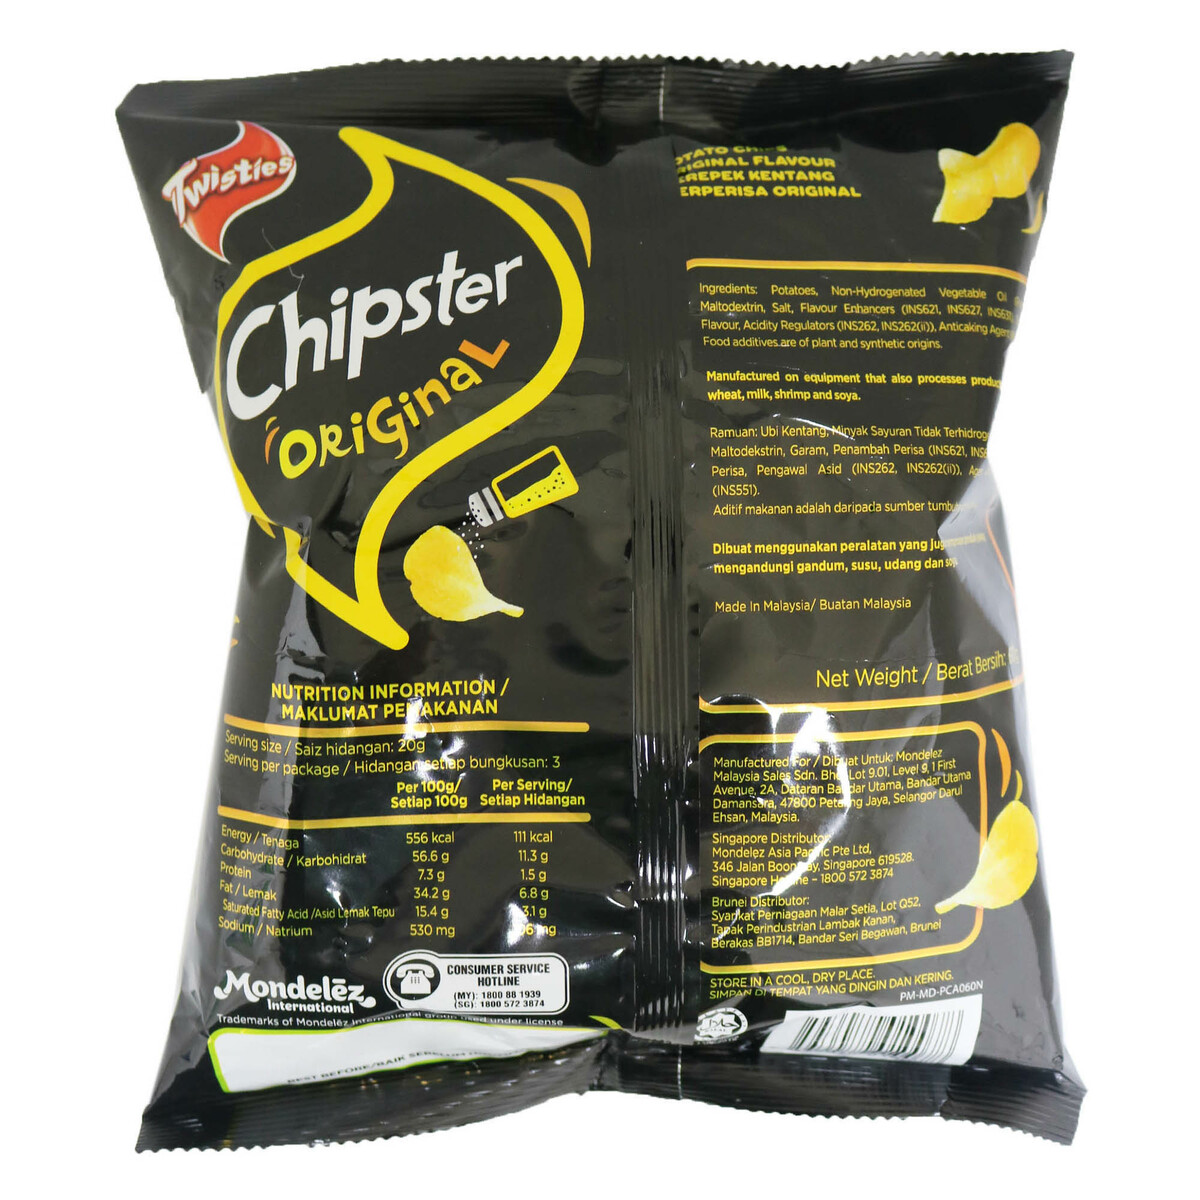 Twisties Chipster Original 60g